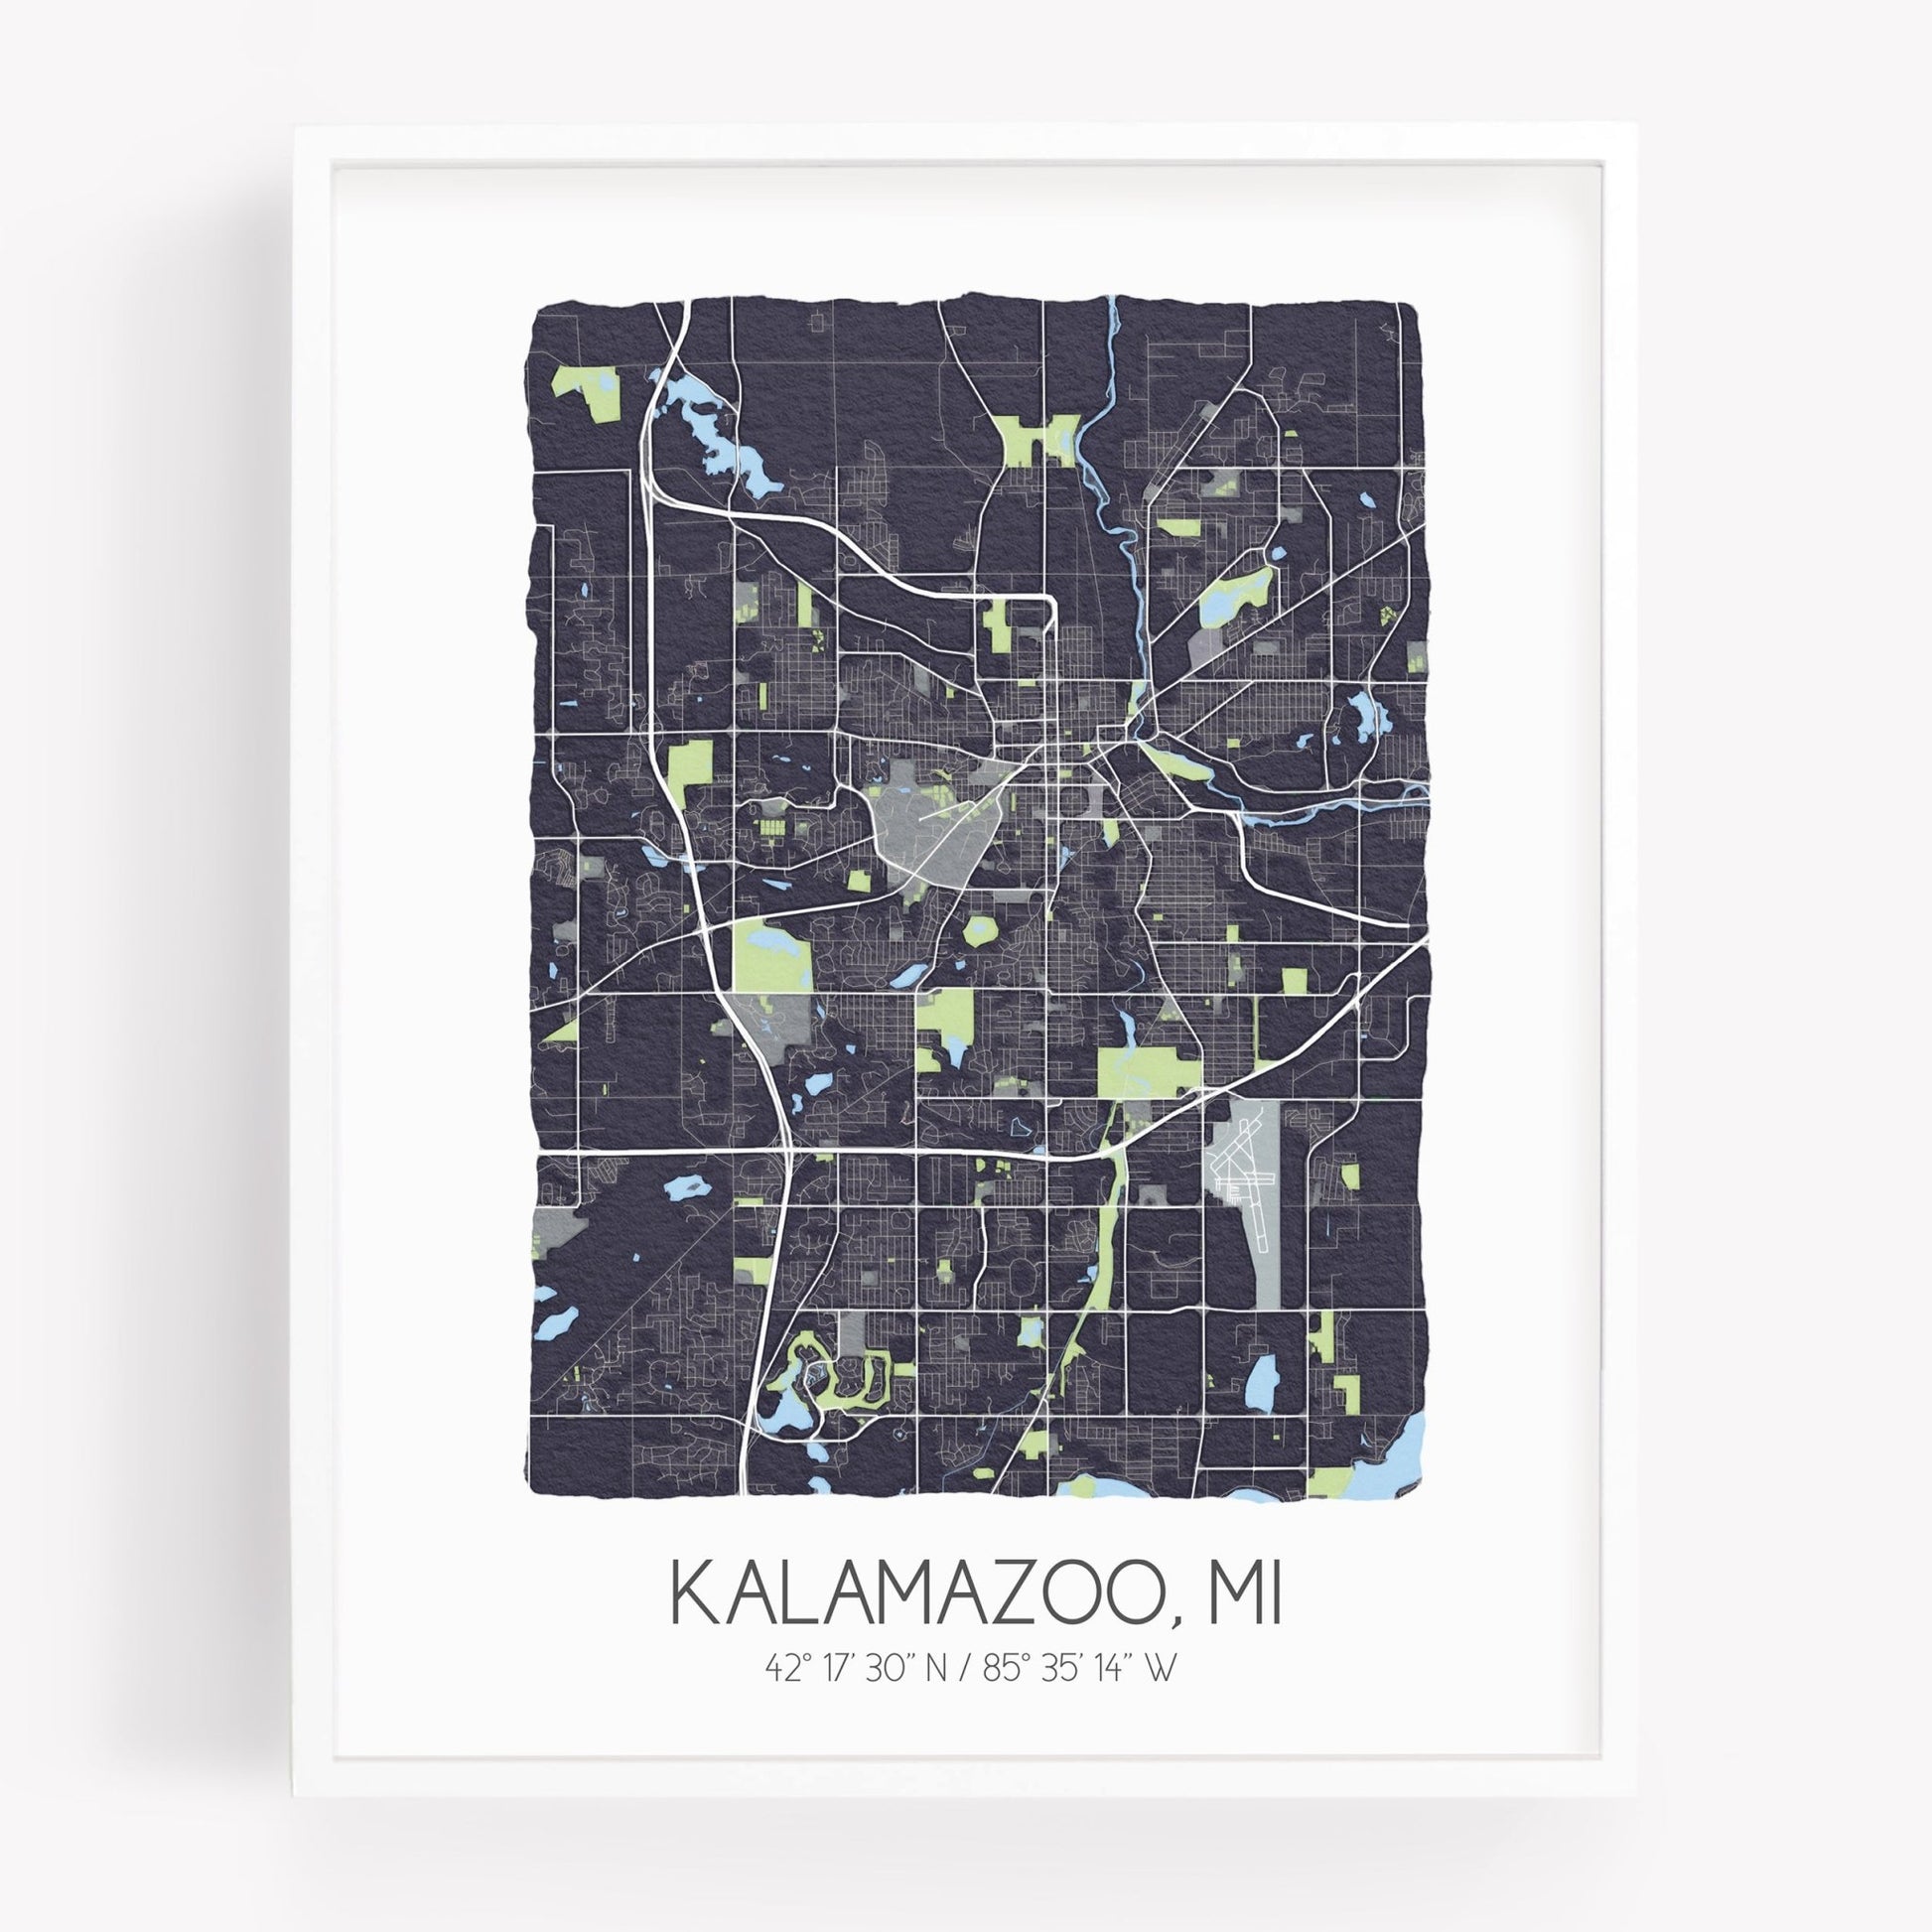 A city map print of Kalamazoo Michigan, in the color gray